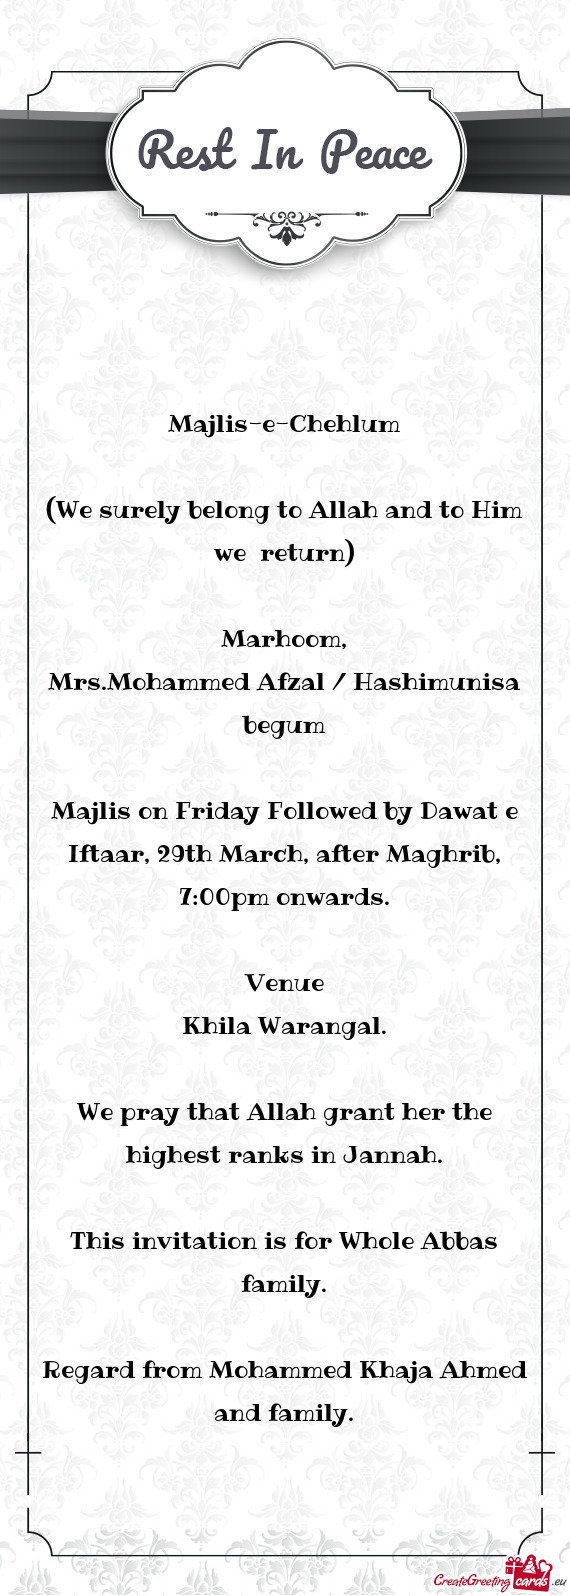 Majlis on Friday Followed by Dawat e Iftaar, 29th March, after Maghrib, 7:00pm onwards